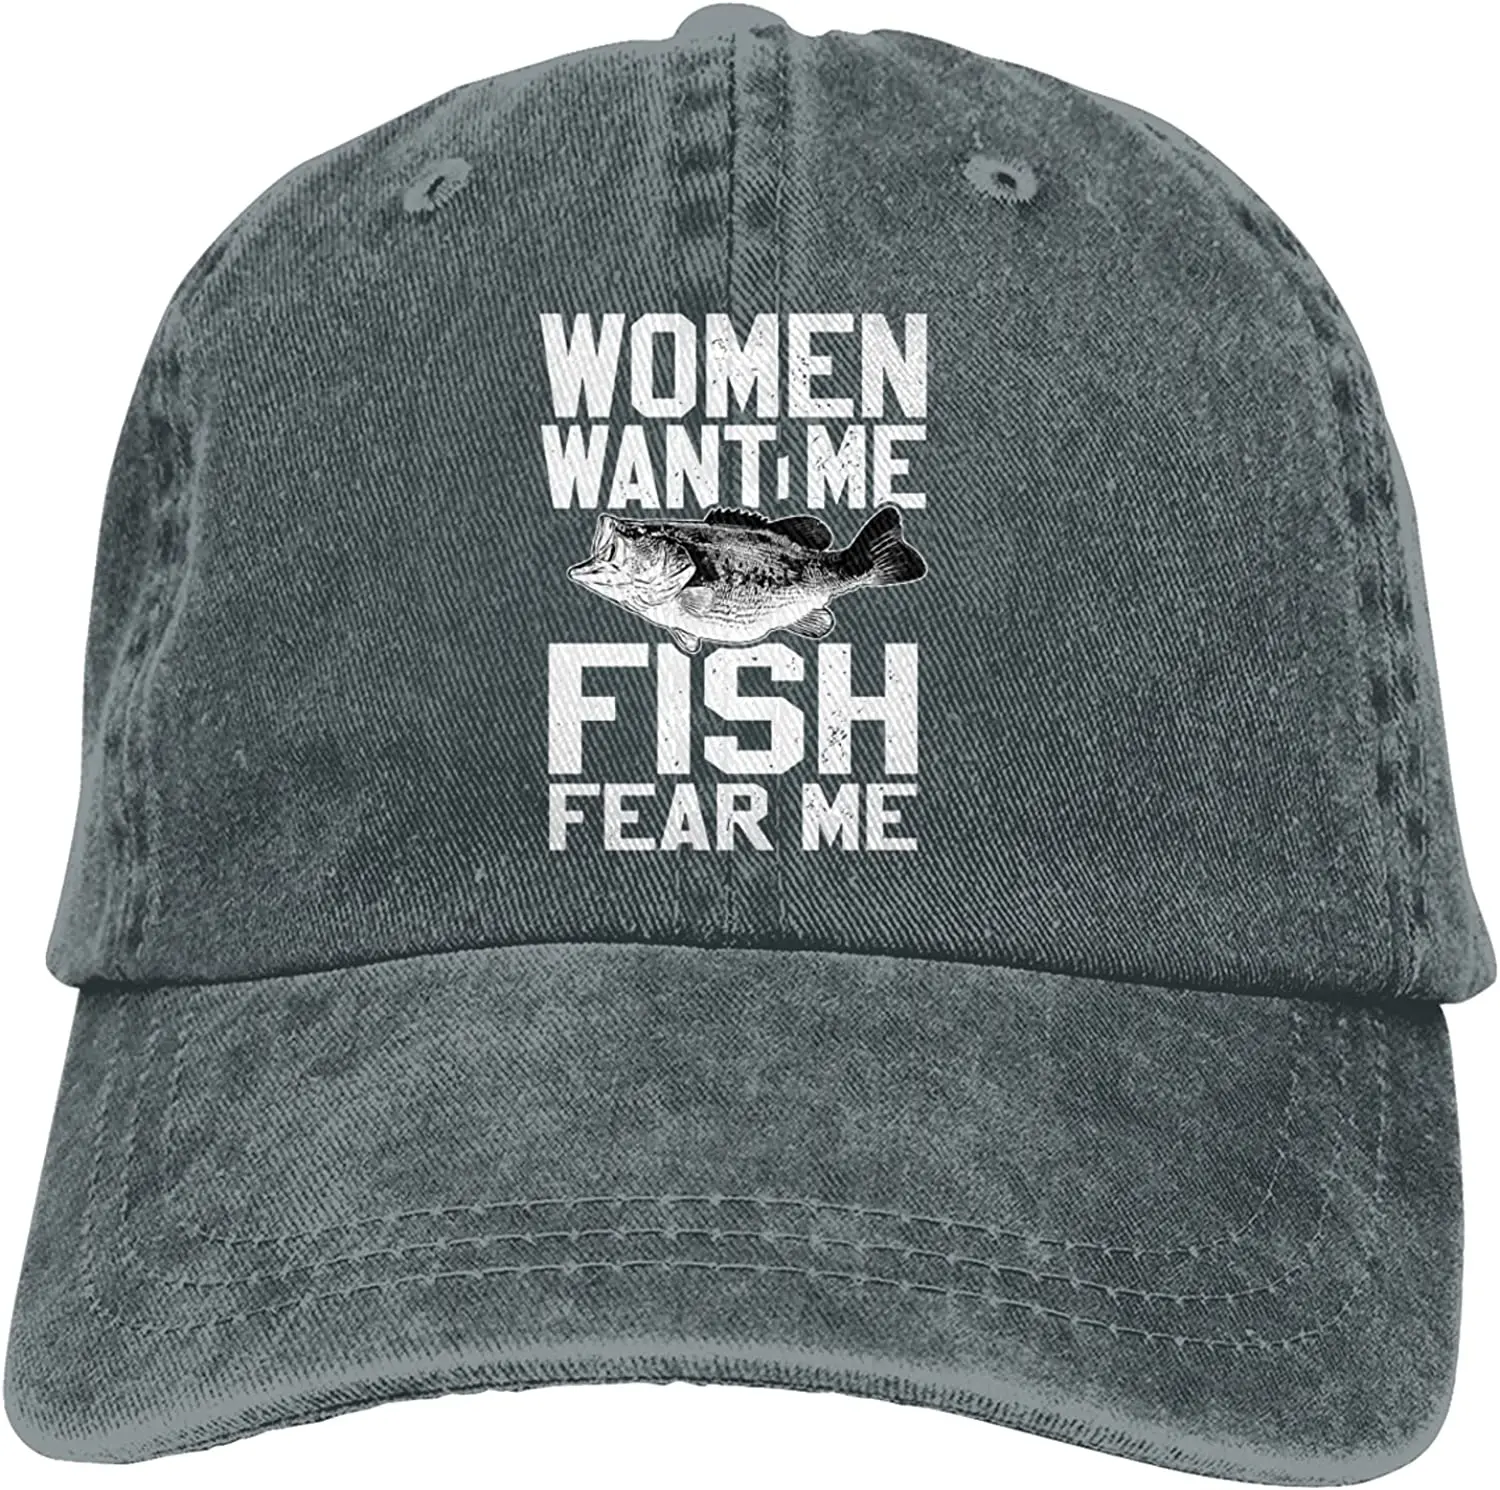 

Women Want Me Fish Fear Me Baseball Cap Retro Adjustable Hip Hop Cool Trucker Visor Fashion Washed Outdoor Baseball Caps